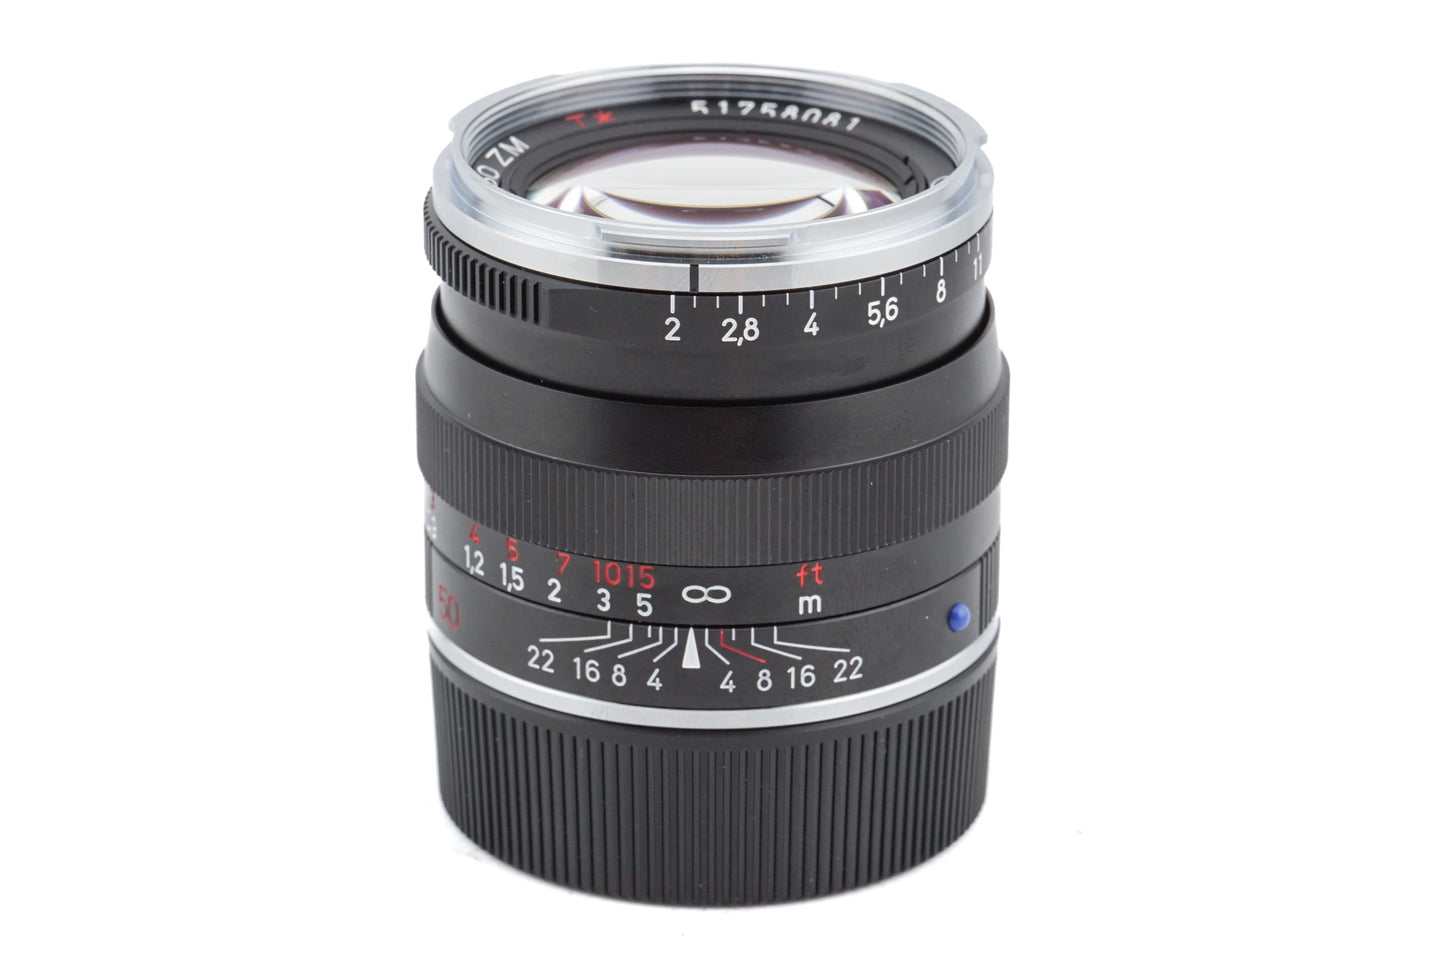 Carl Zeiss 50mm f2 Planar T* ZM - Lens